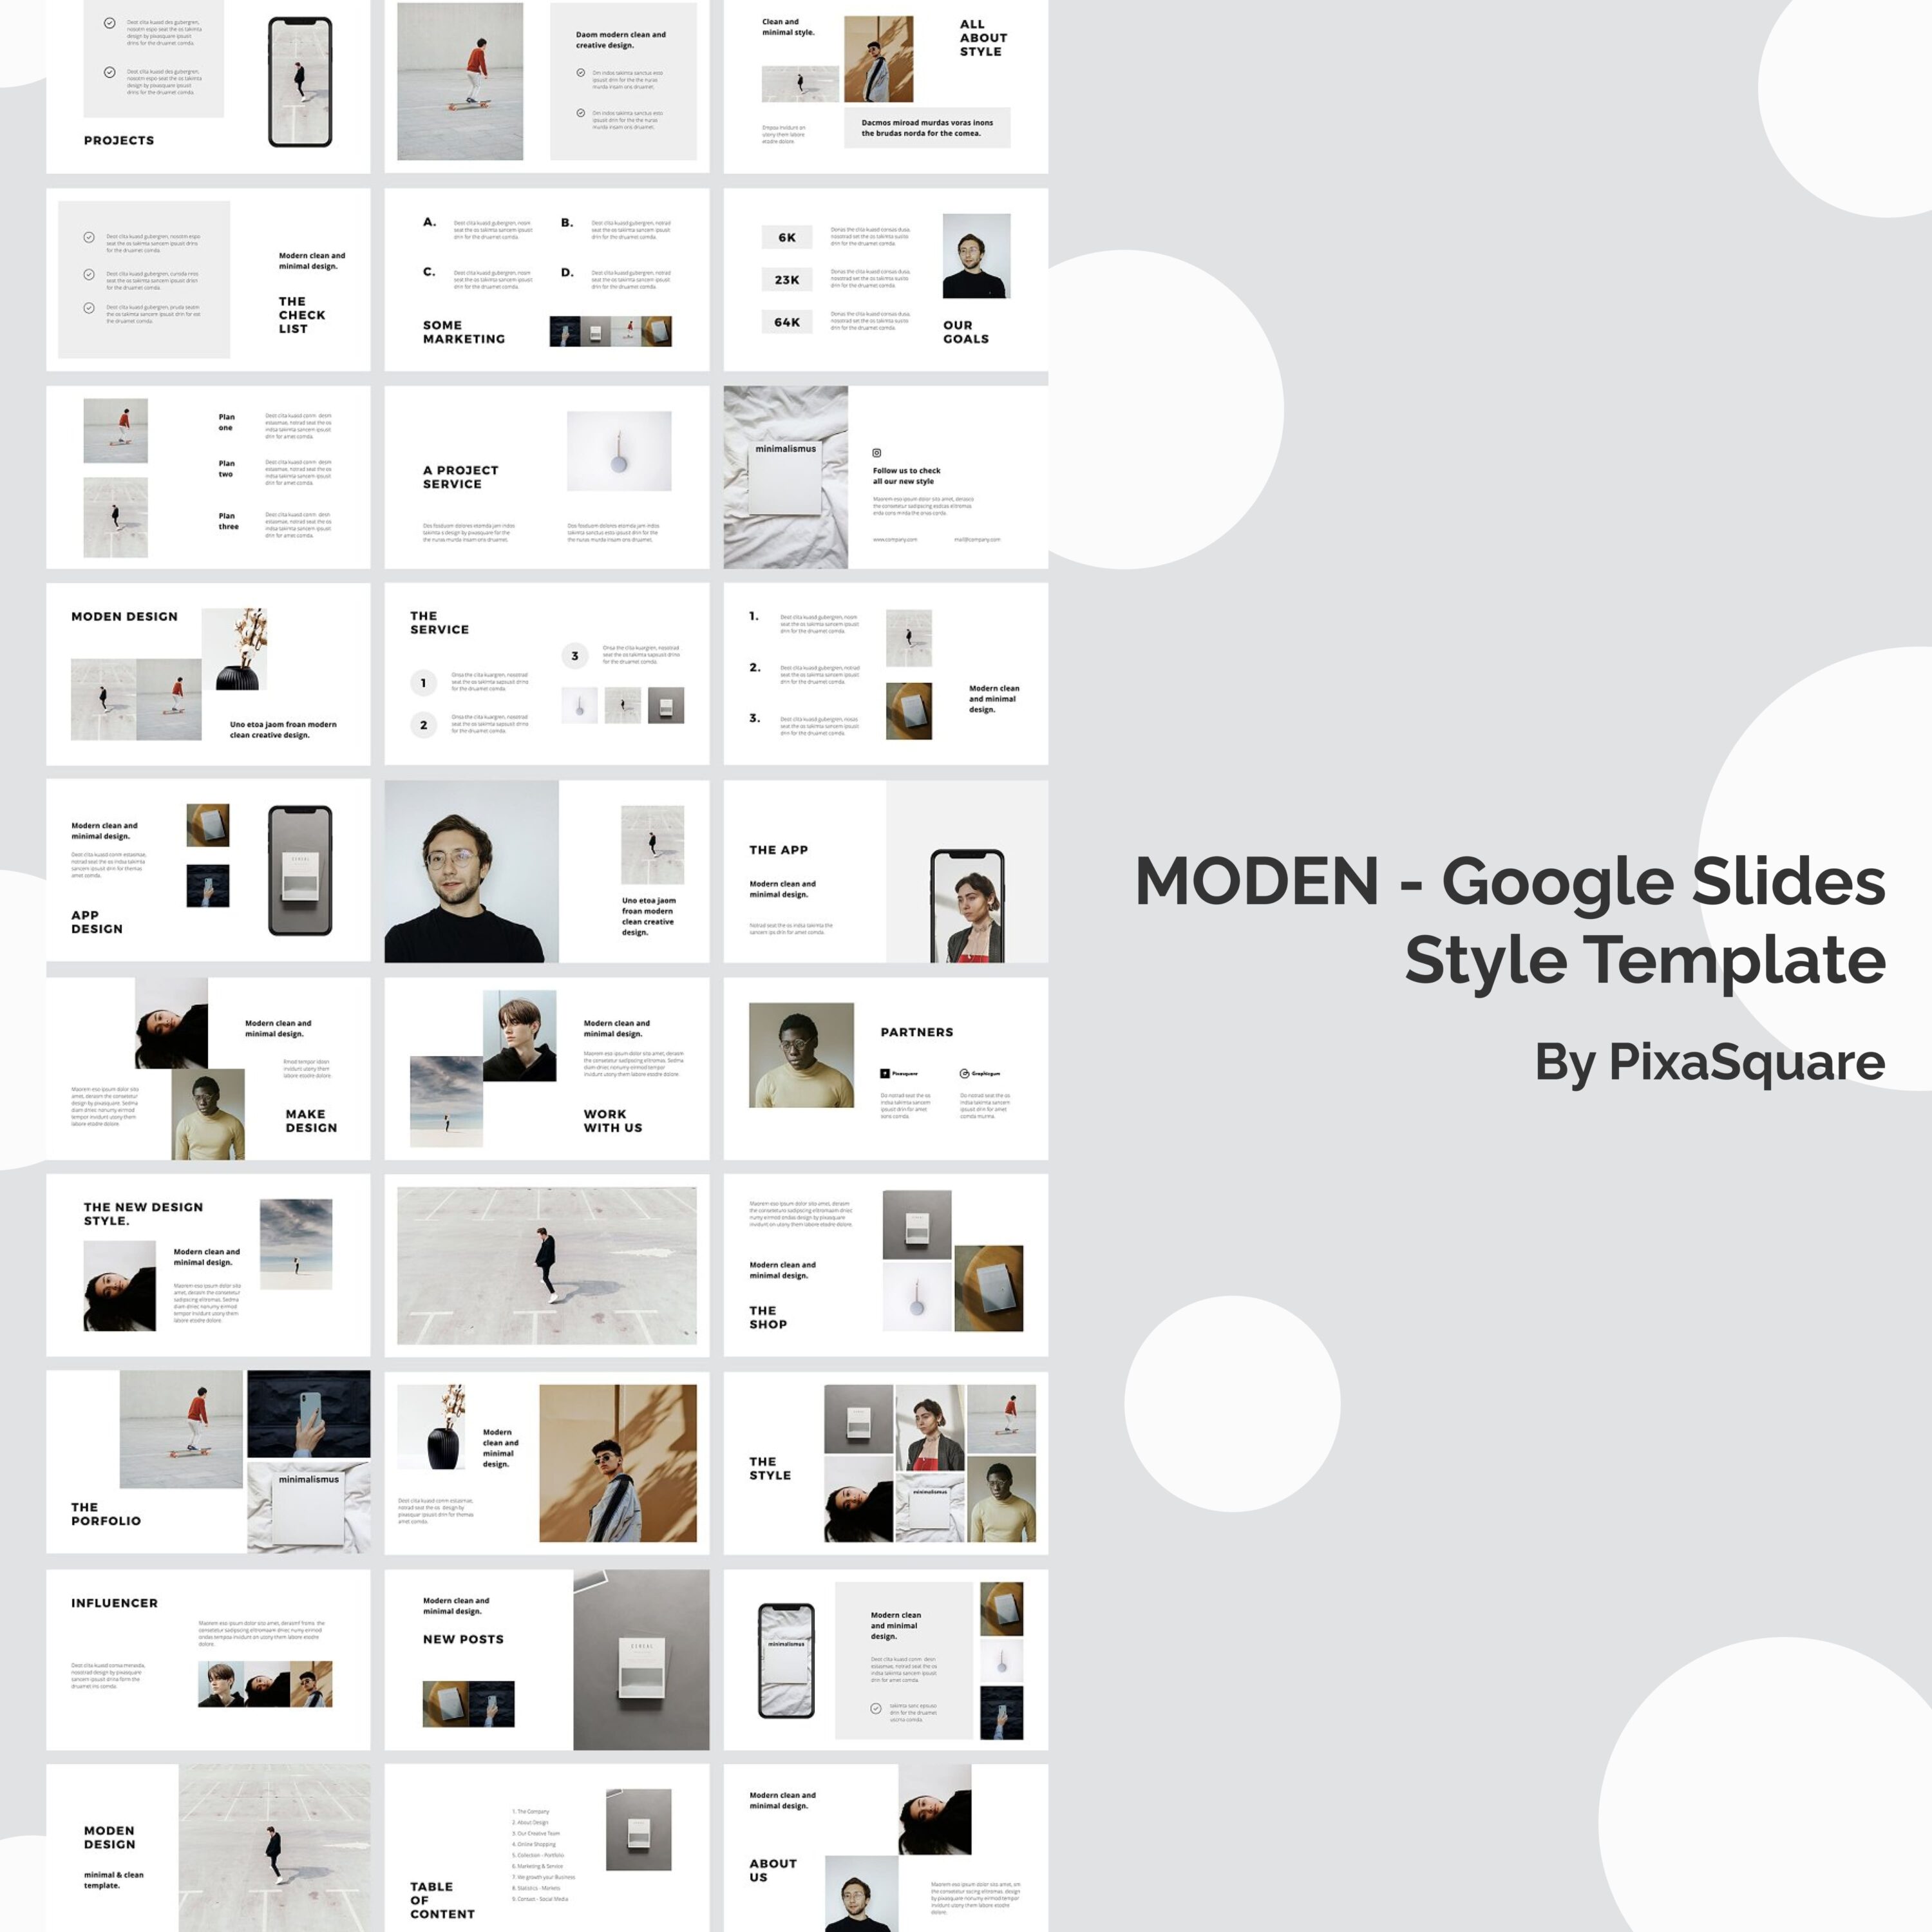 MODEN - Google Slides Style Template.